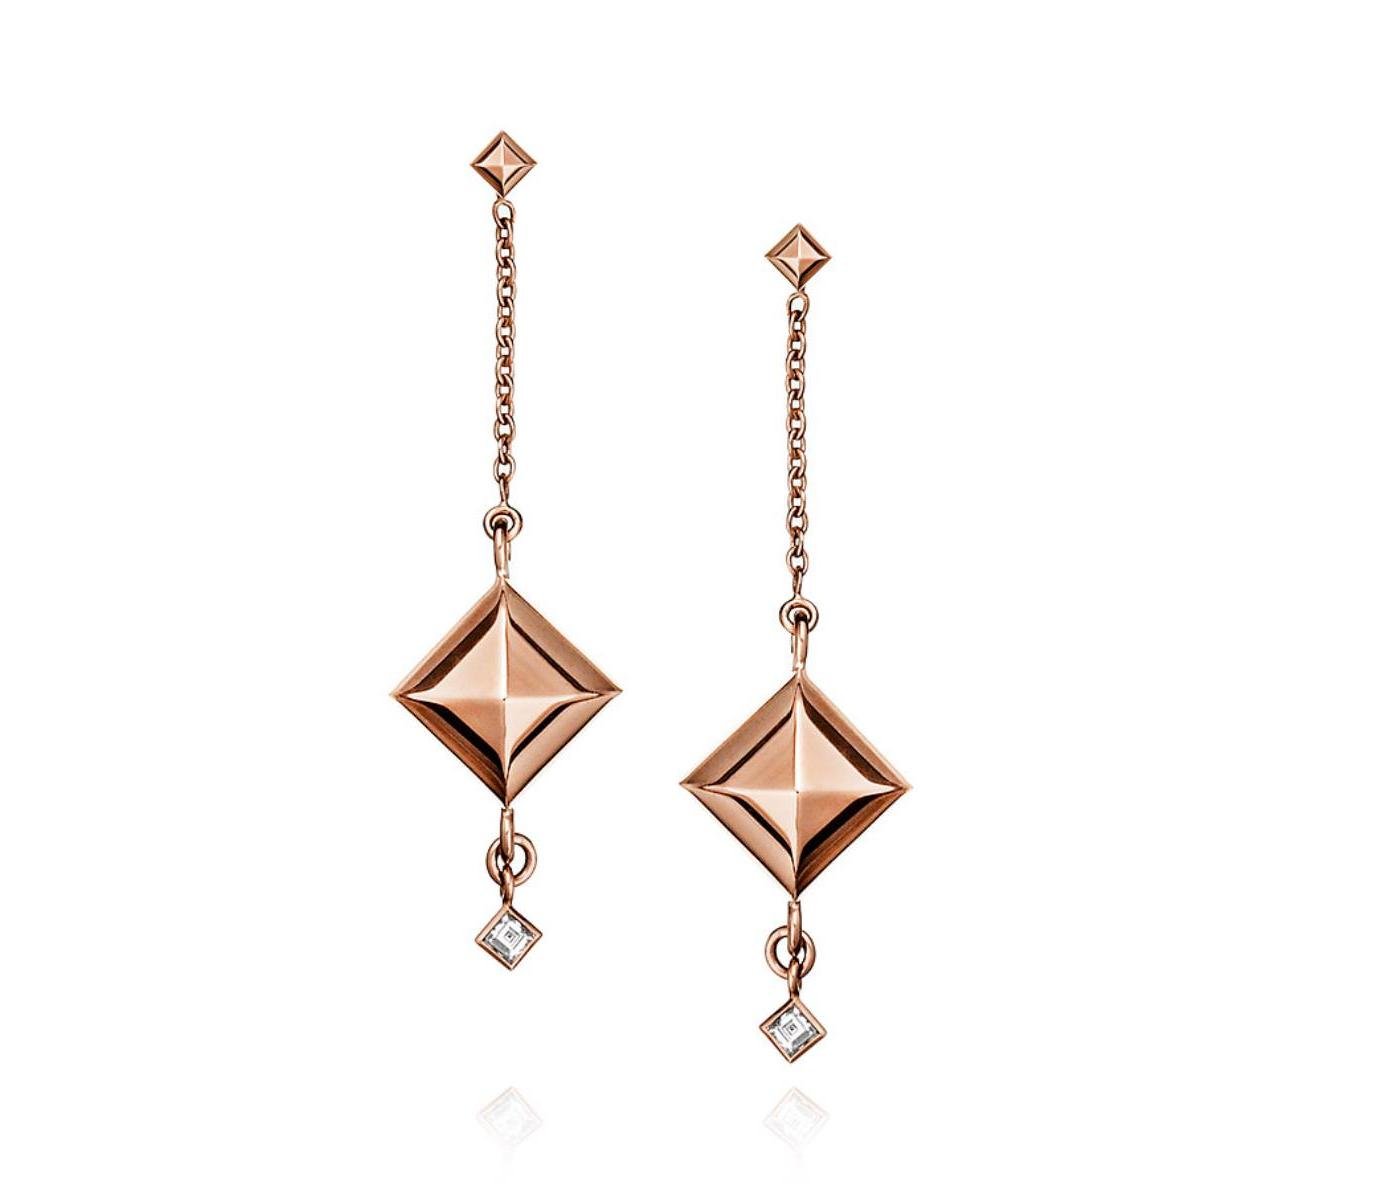 Earrings by Hermès